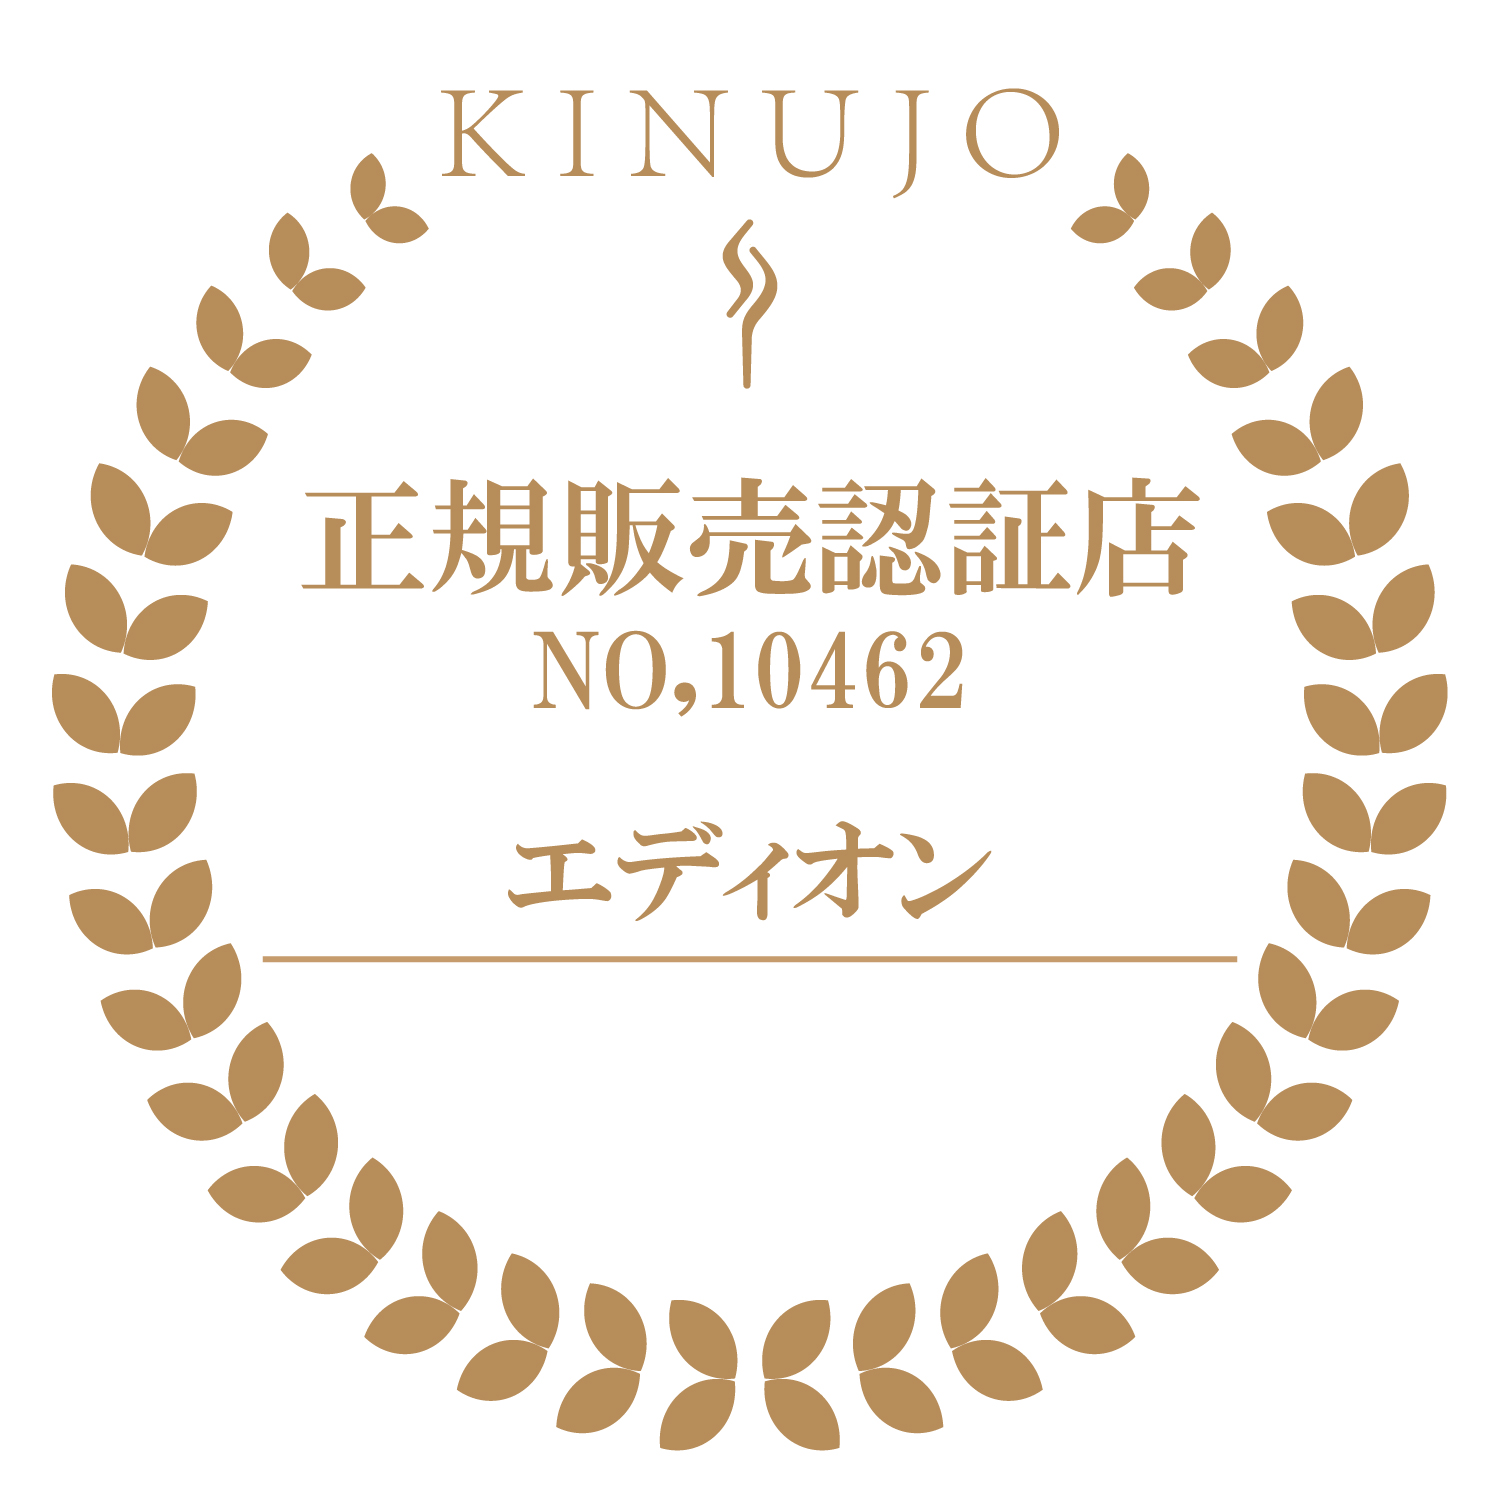 KINUJO DS100BK ストレートヘアアイロン KINUJO W -worldwide model